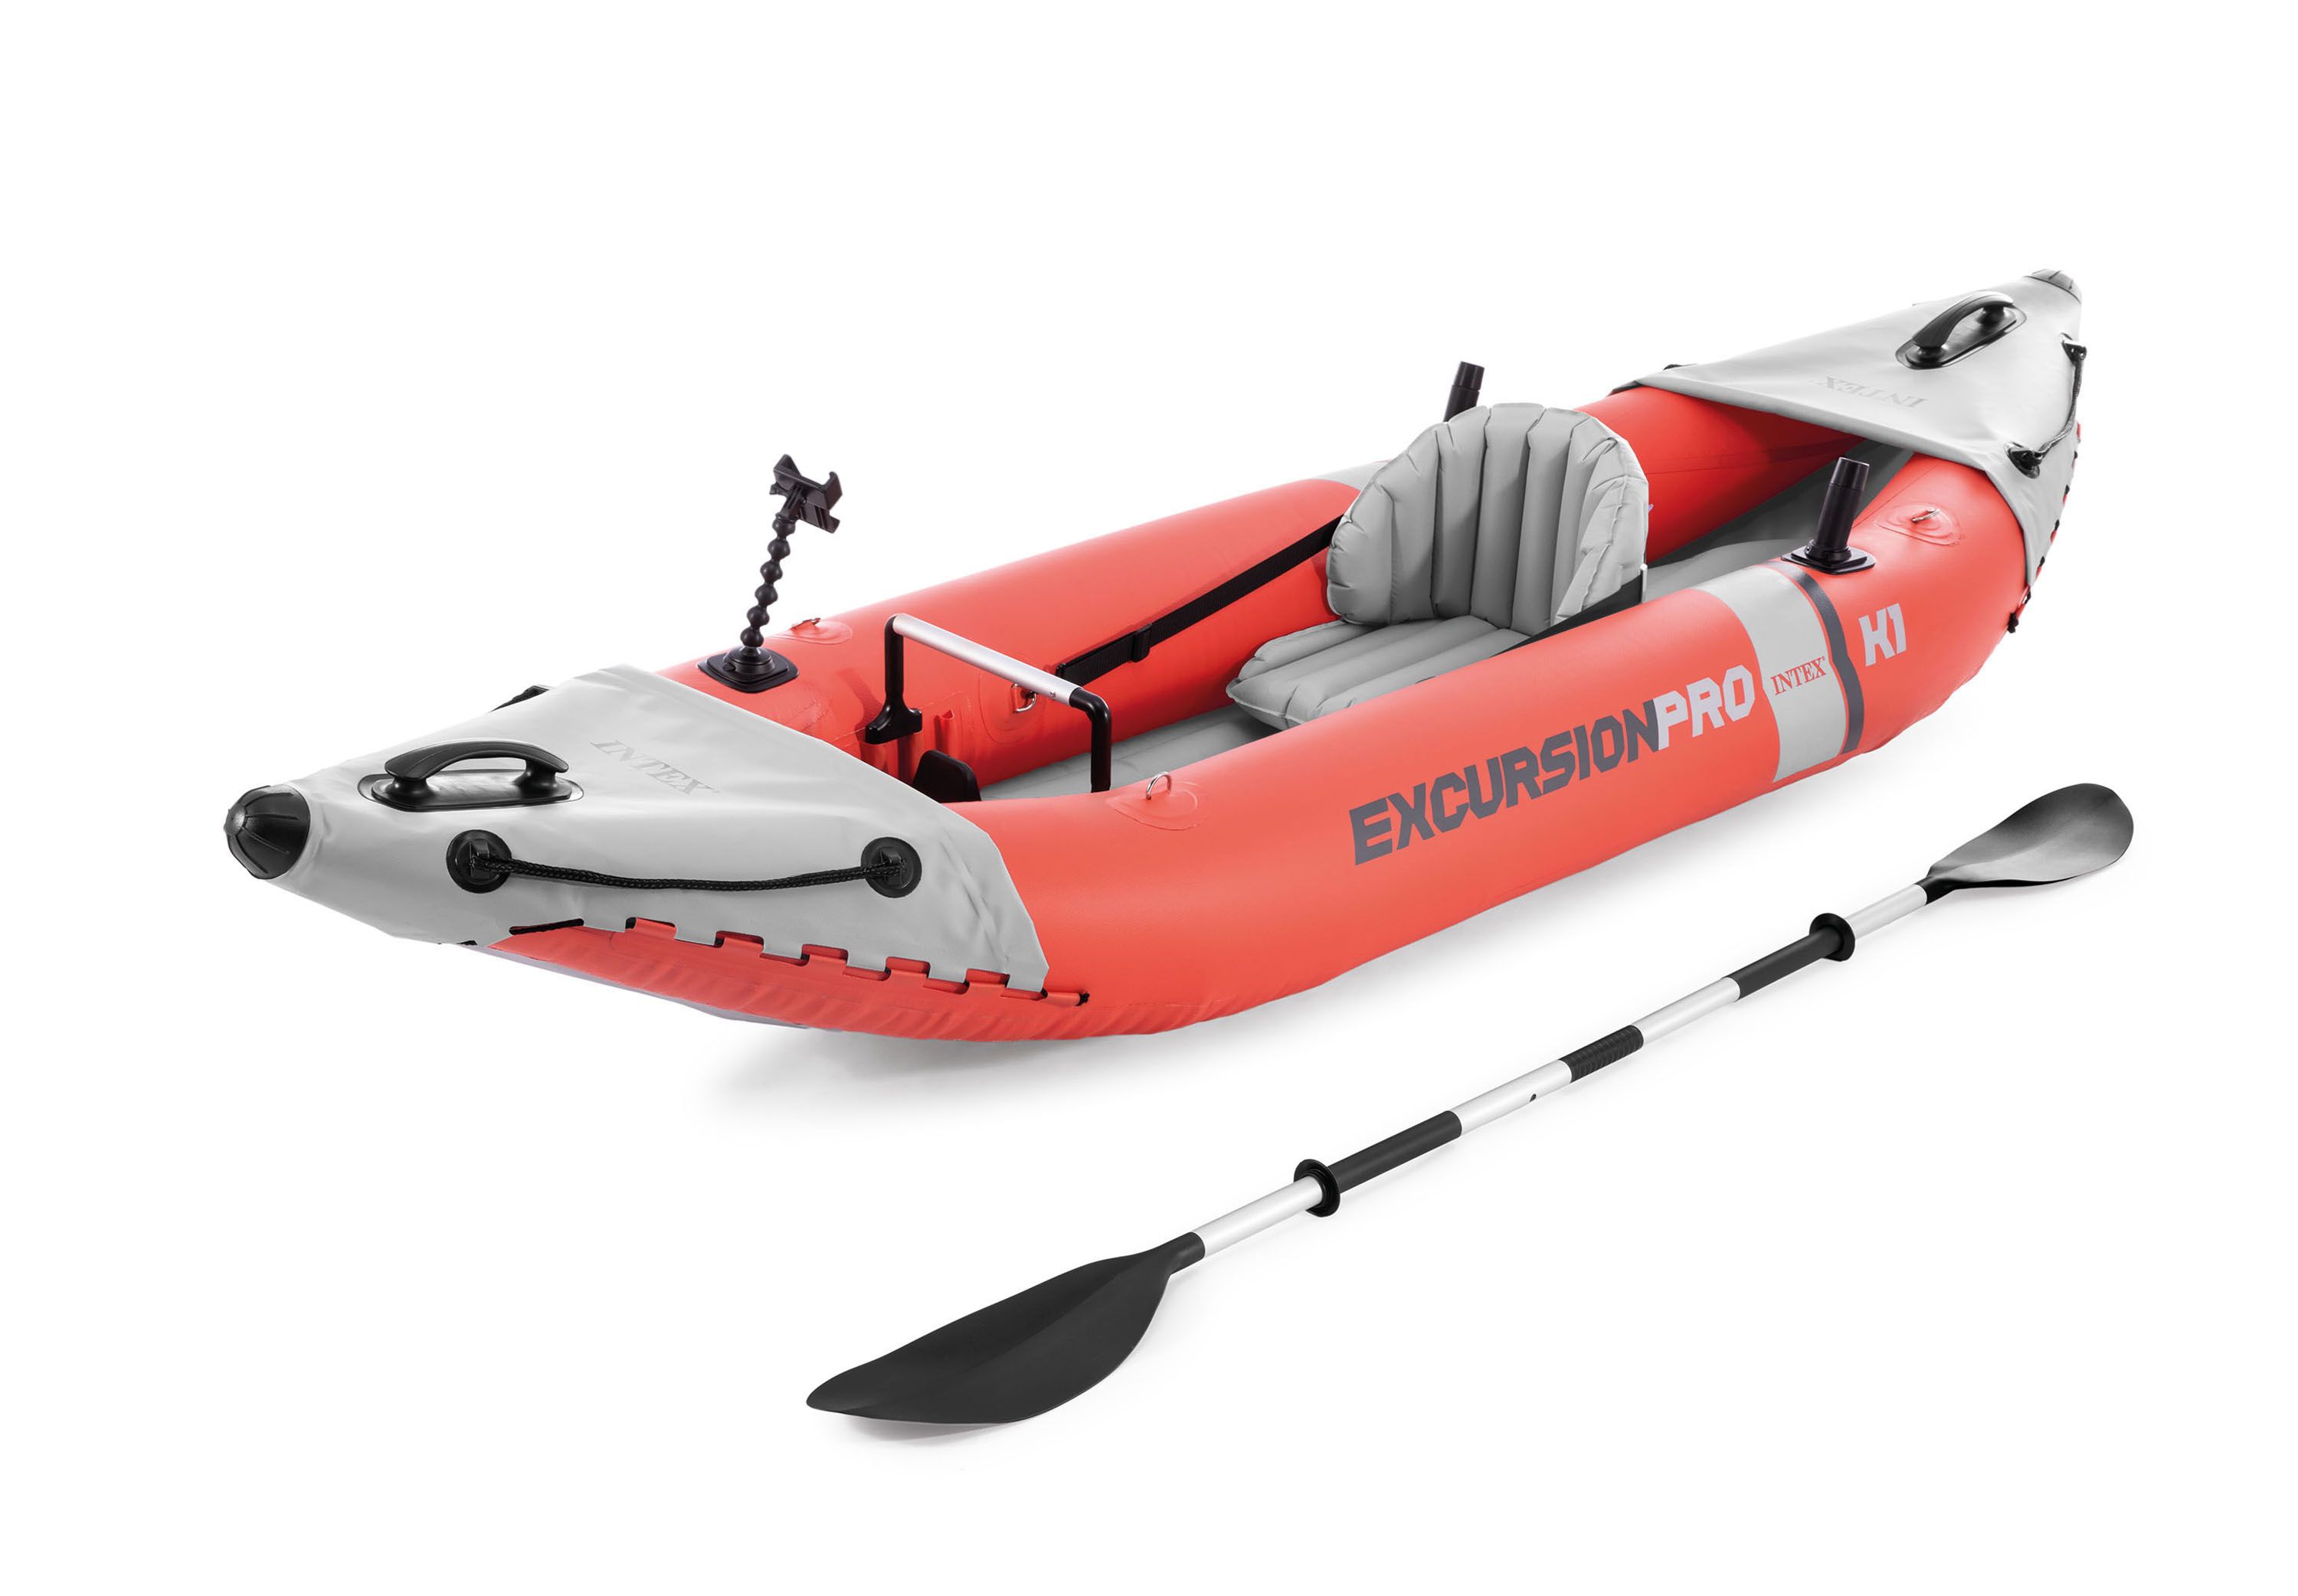 Intex Excursion Pro K1 Inflatable 1-Person Fishing Kayak